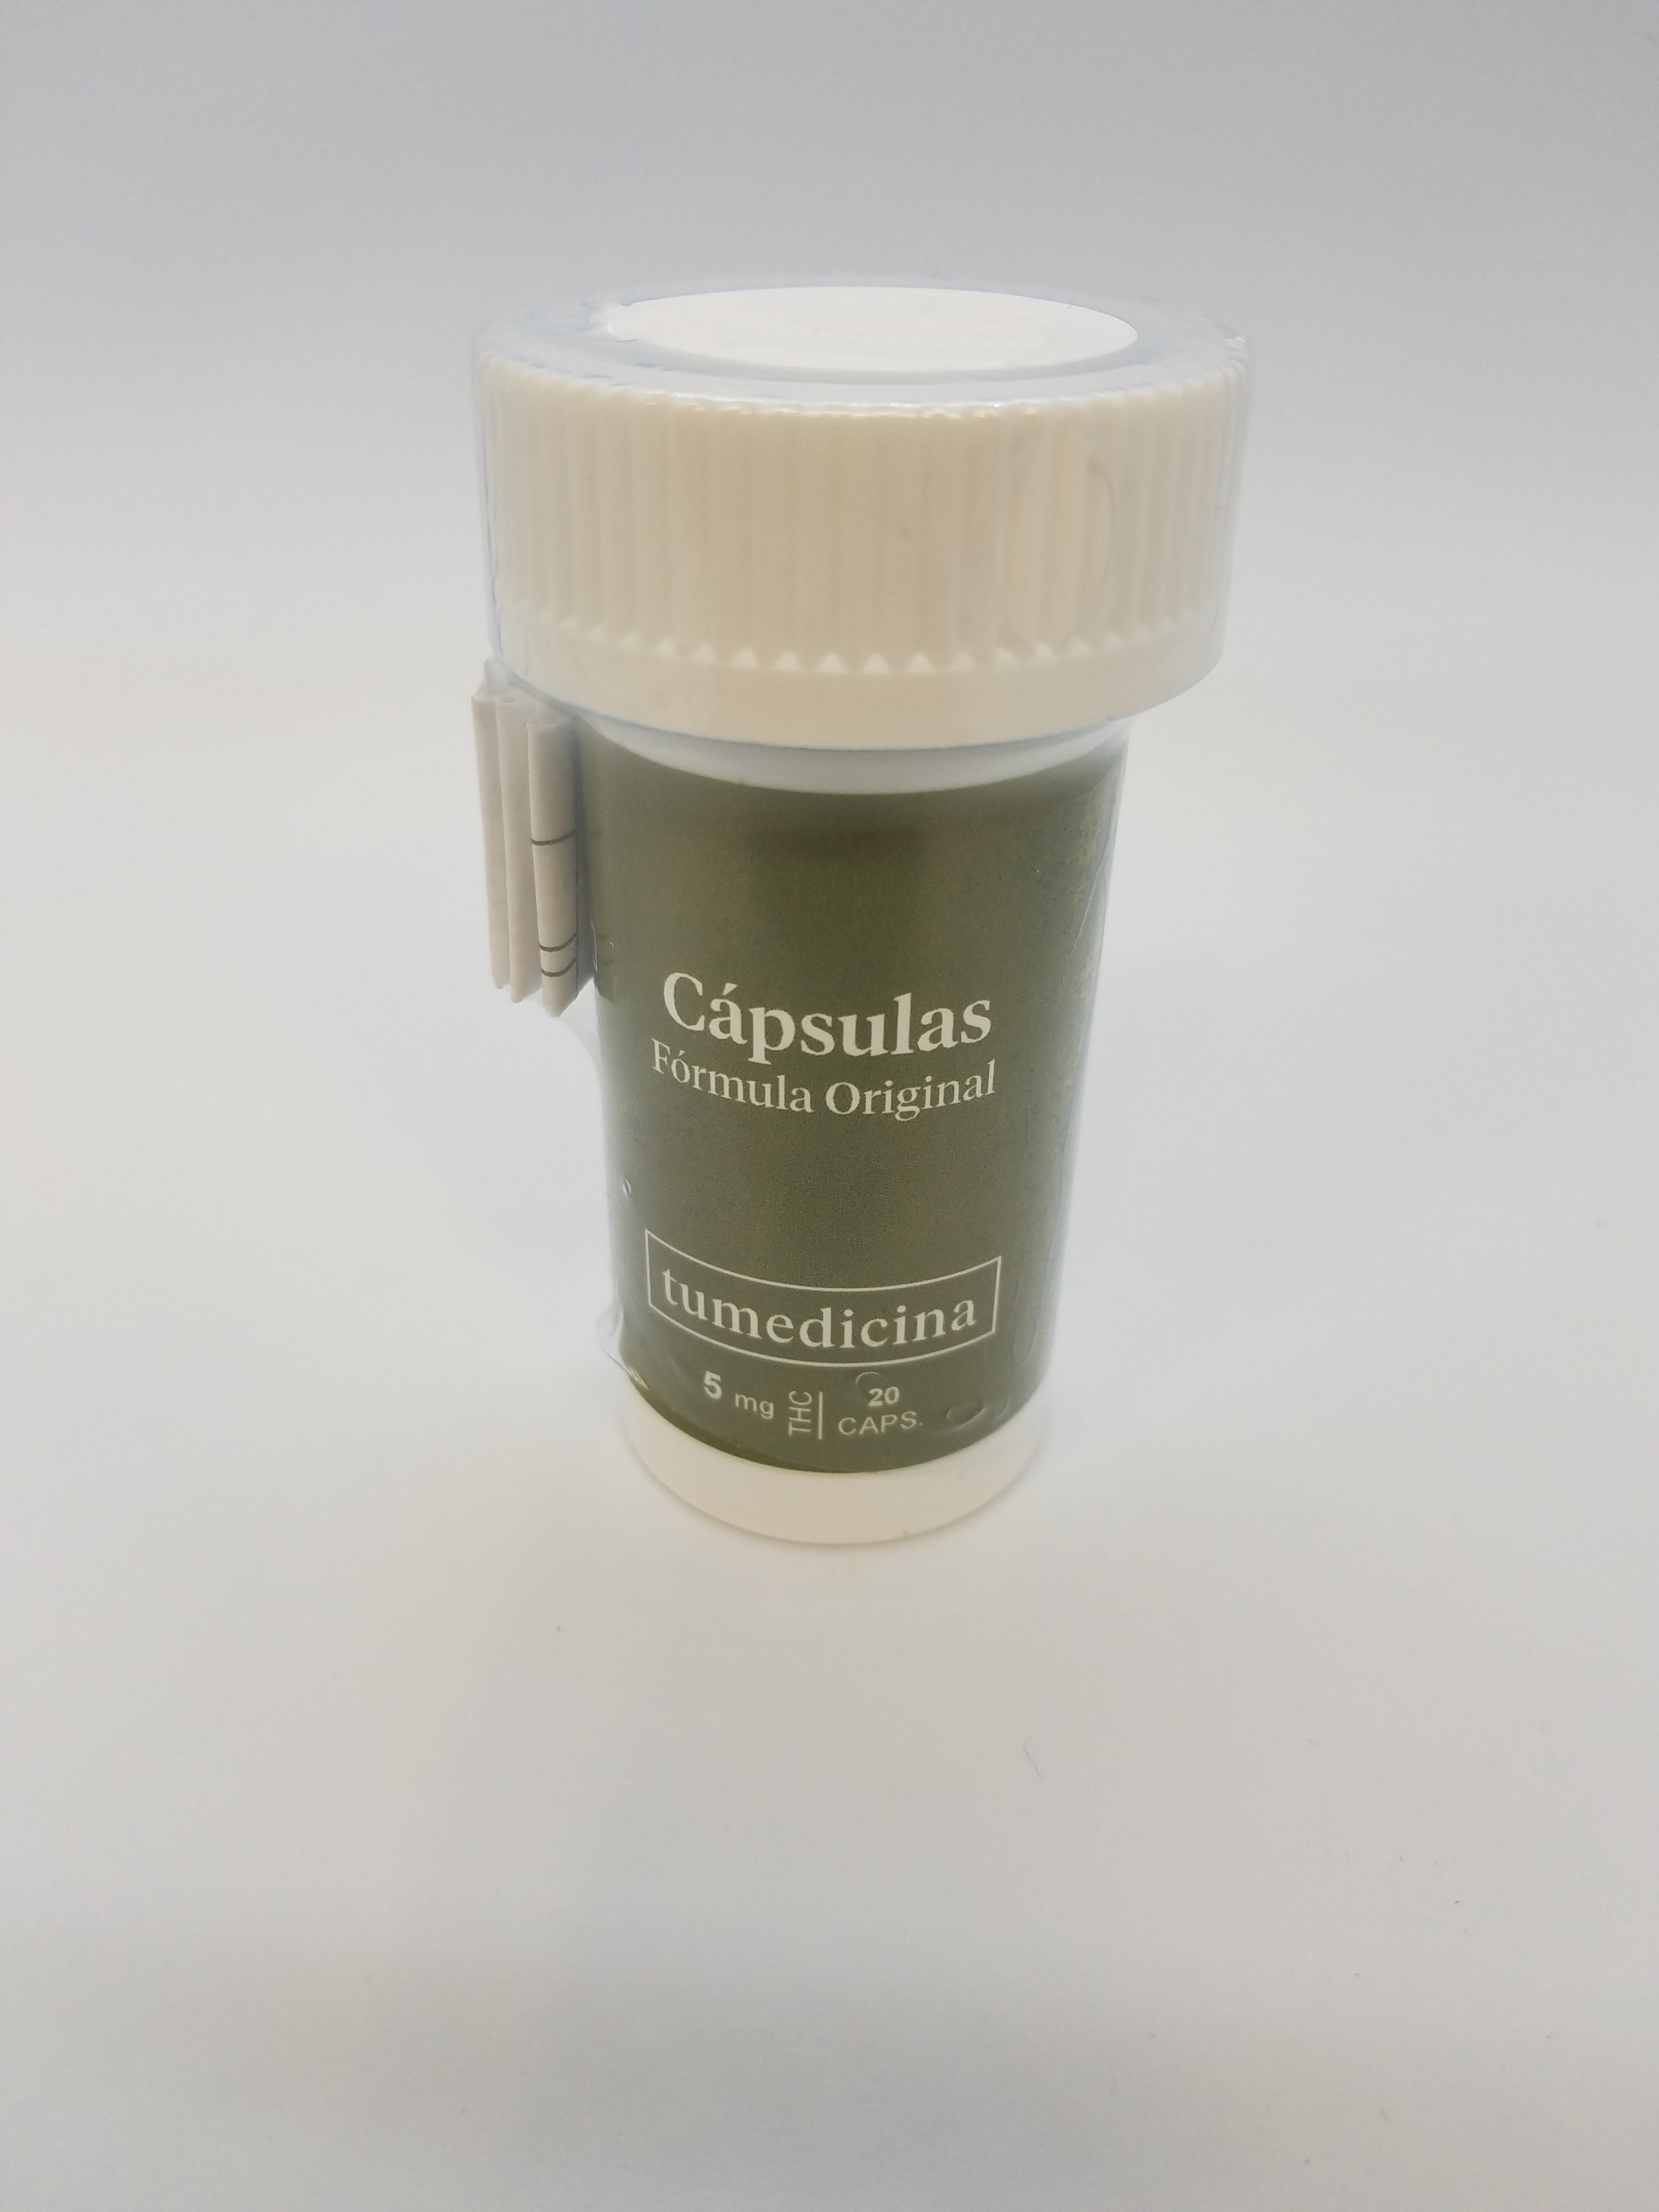 edible-cima-original-capsules-5mg-20caps